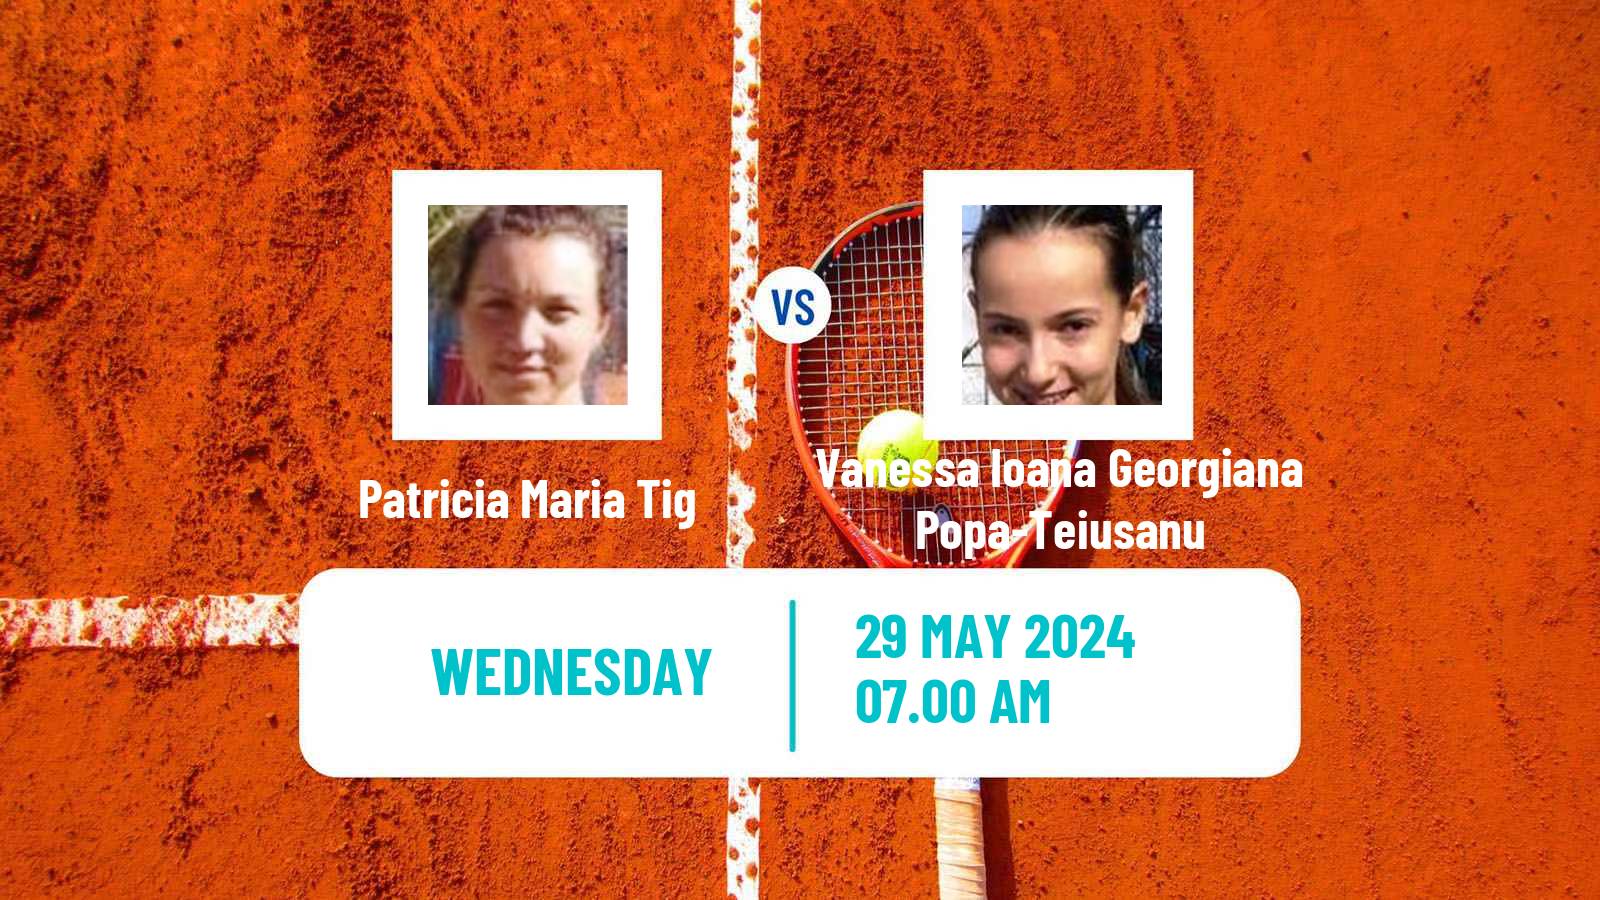 Tennis ITF W15 Galati Women Patricia Maria Tig - Vanessa Ioana Georgiana Popa-Teiusanu